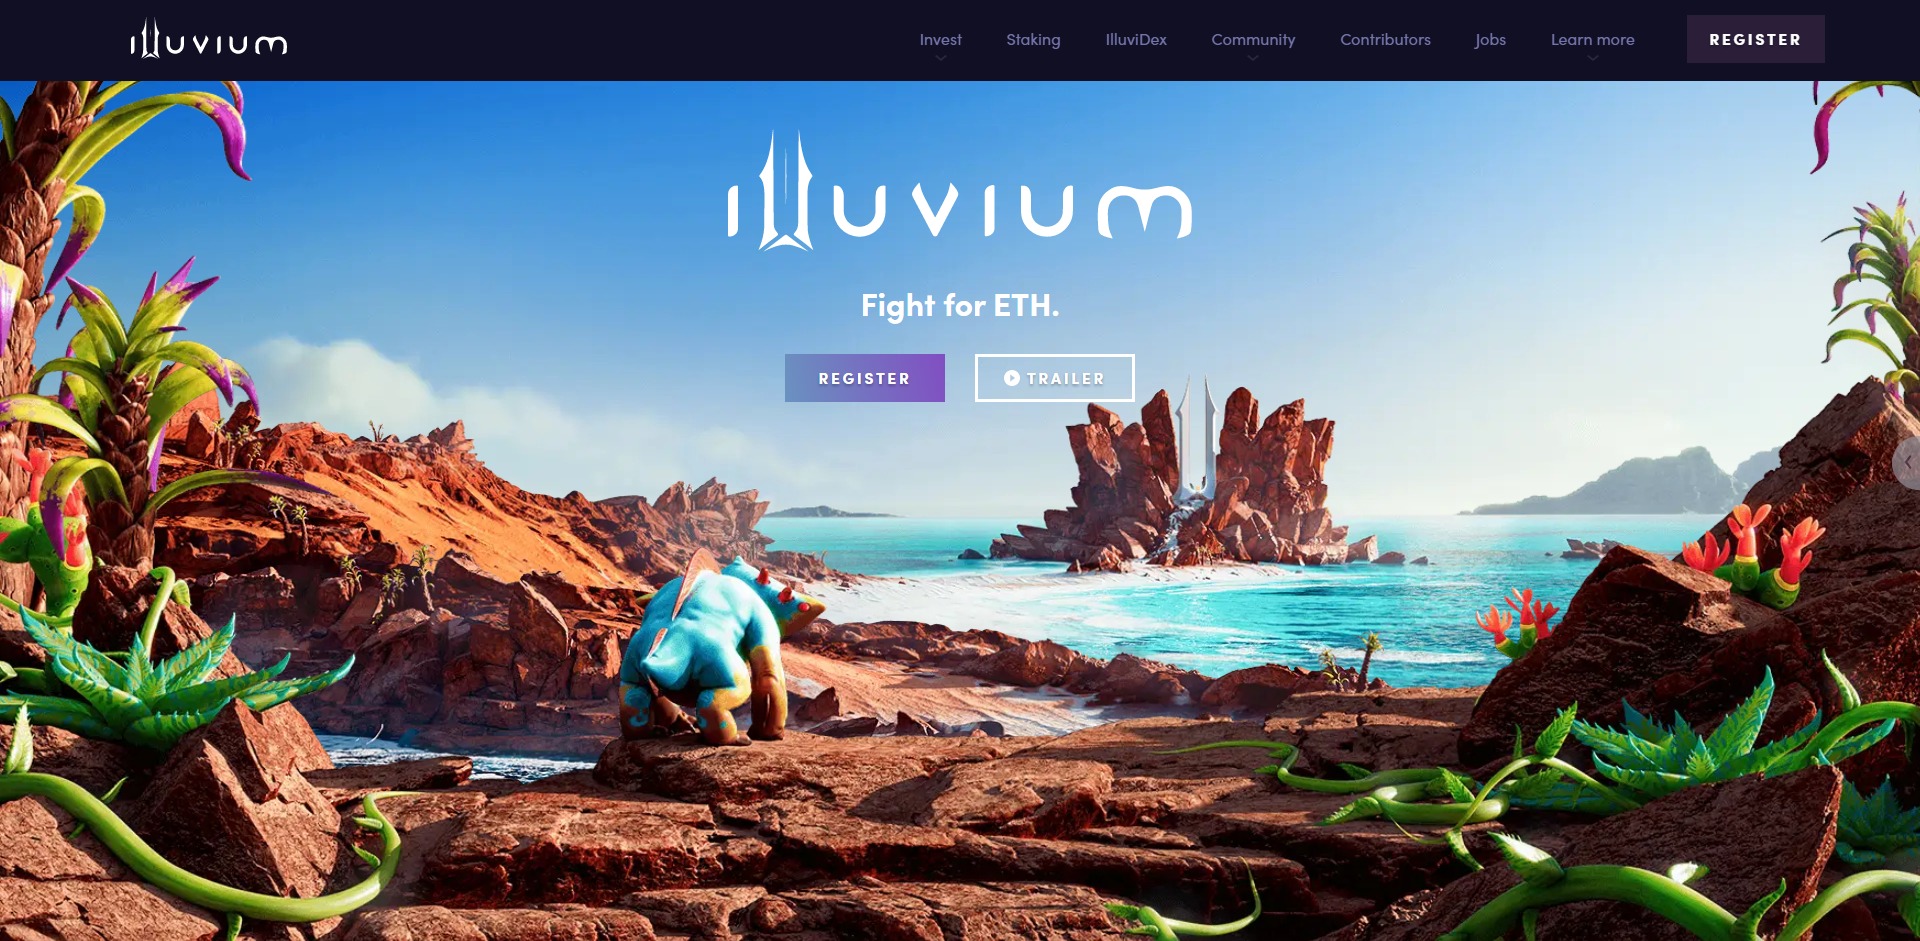 How To Buy Illuvium (ILV) Token – 4 Steps – Buy ILV Token ...